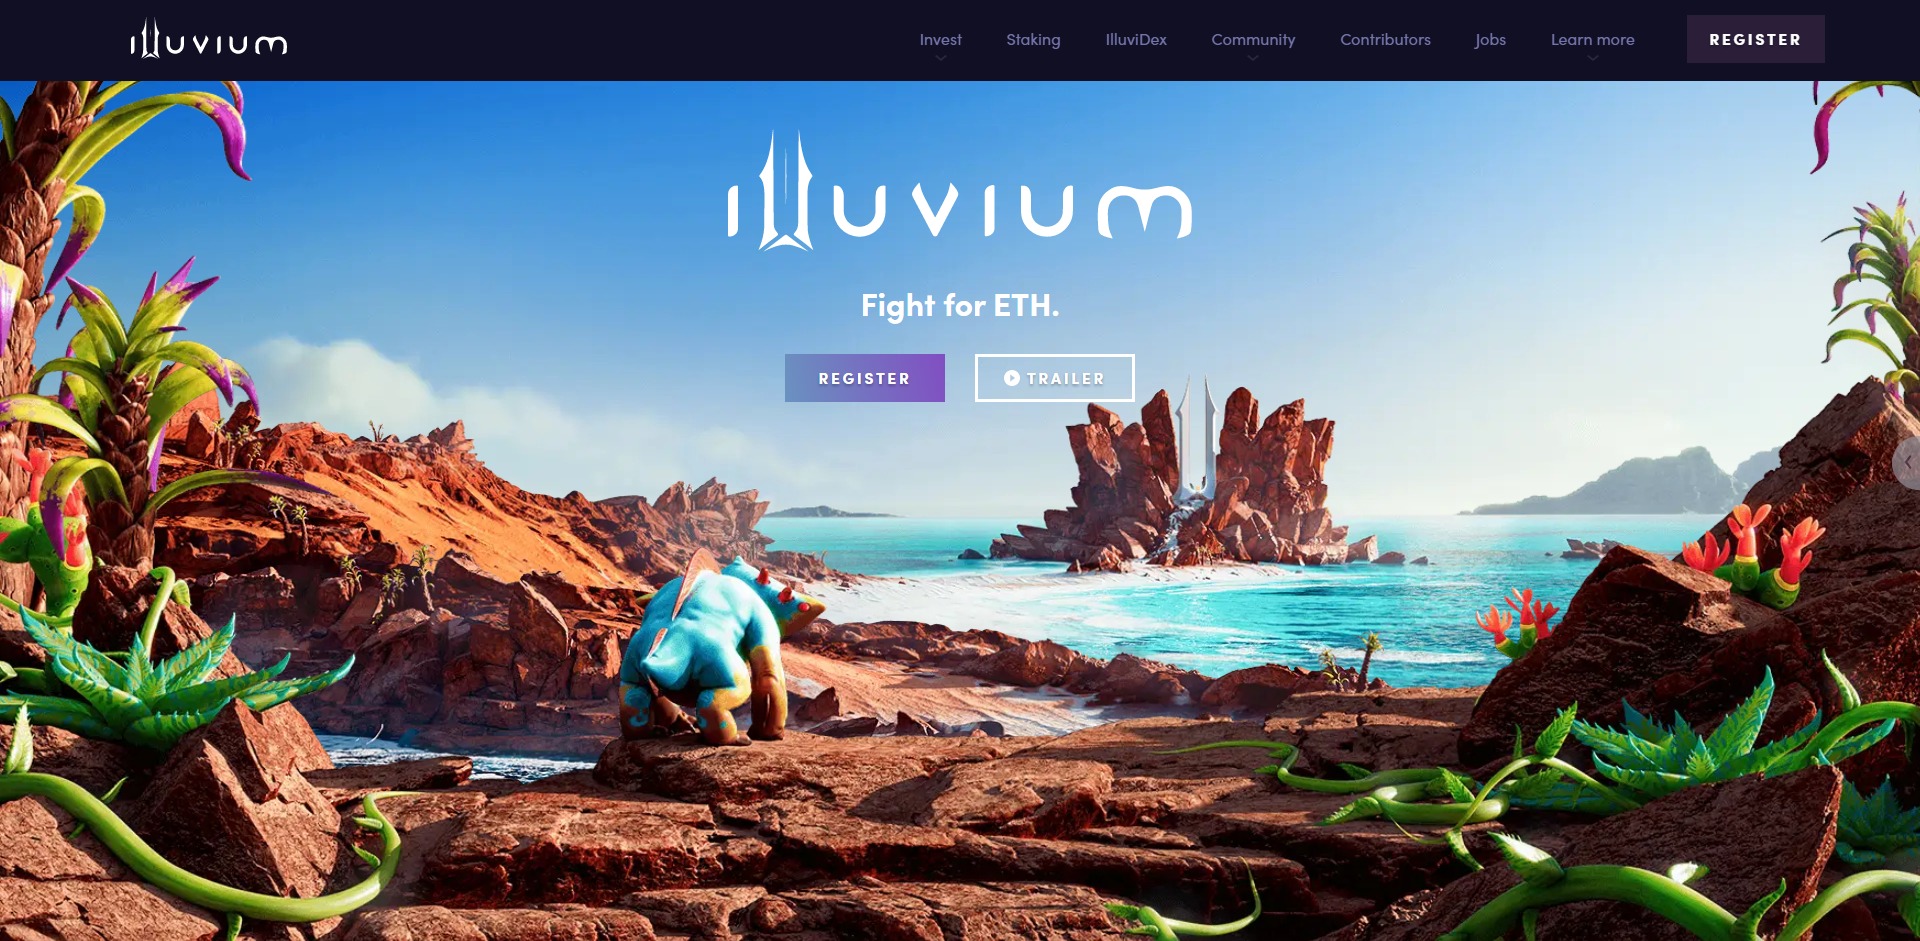 How To Buy Illuvium (ILV) Token – 4 Steps – Buy ILV Token ...